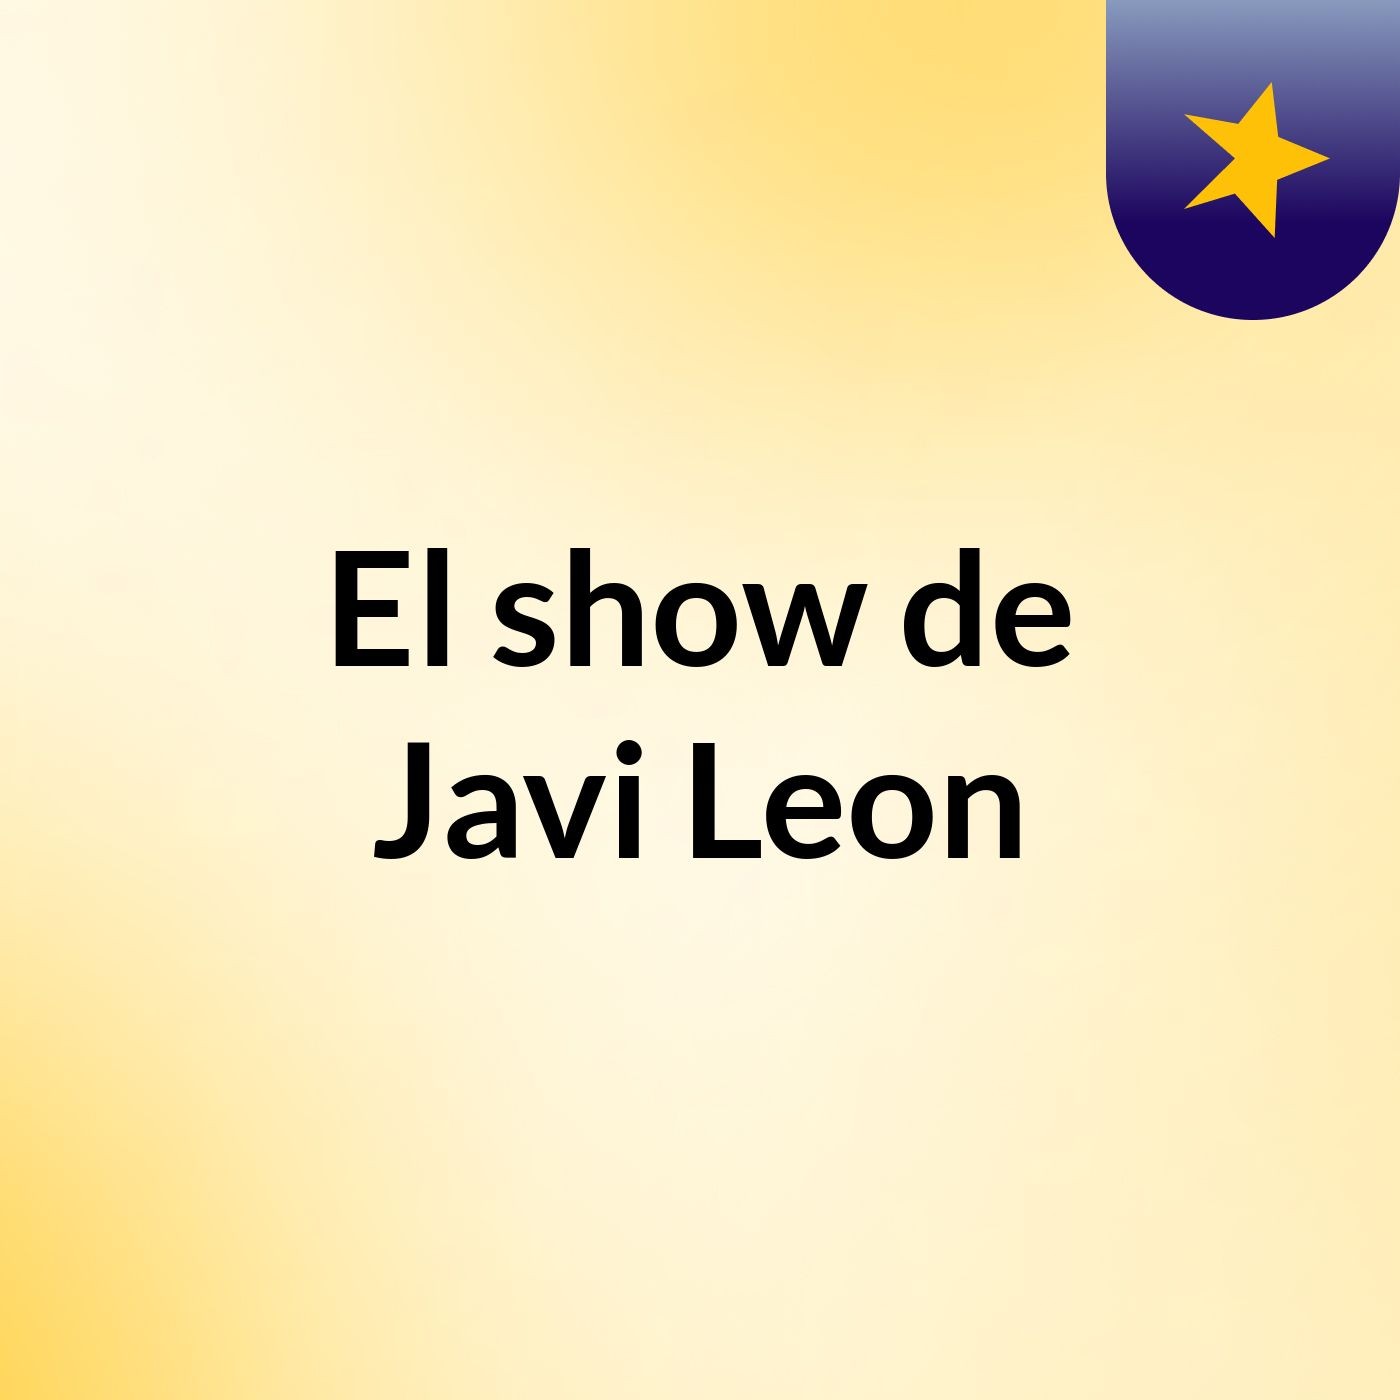 Episodio 2 - El show de Javi Leon